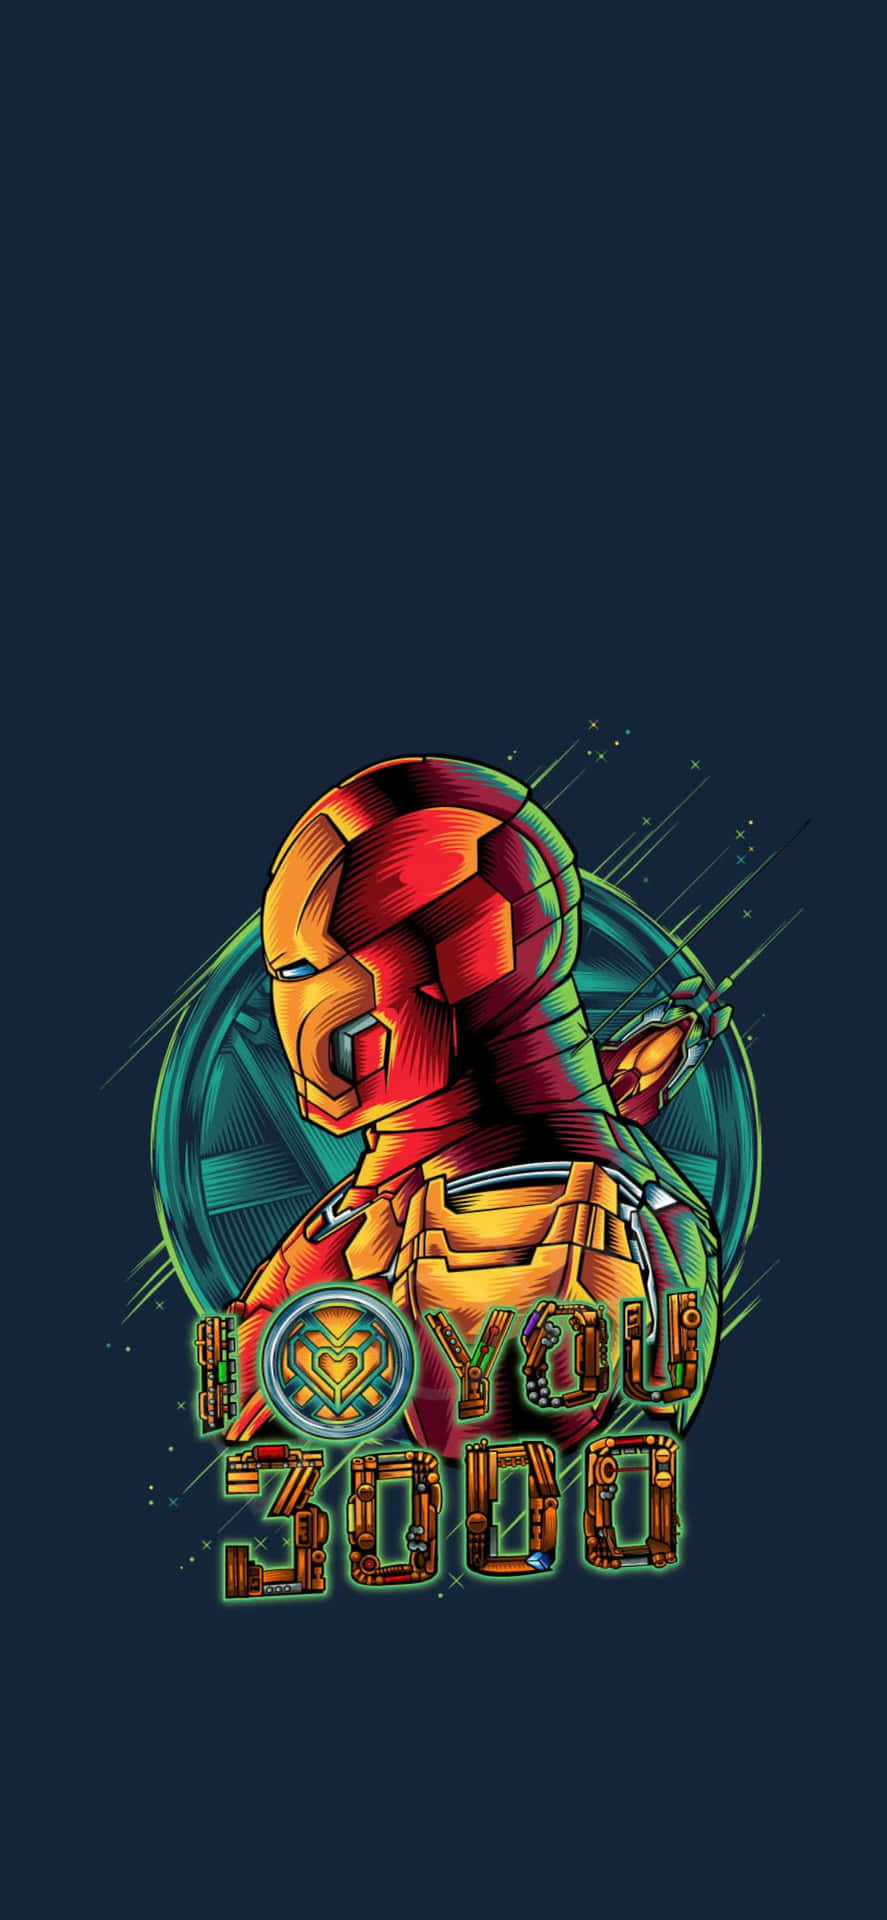 Iphonexs Avengers Hintergrund Iron Man Ich Liebe Dich 3000 Fanart